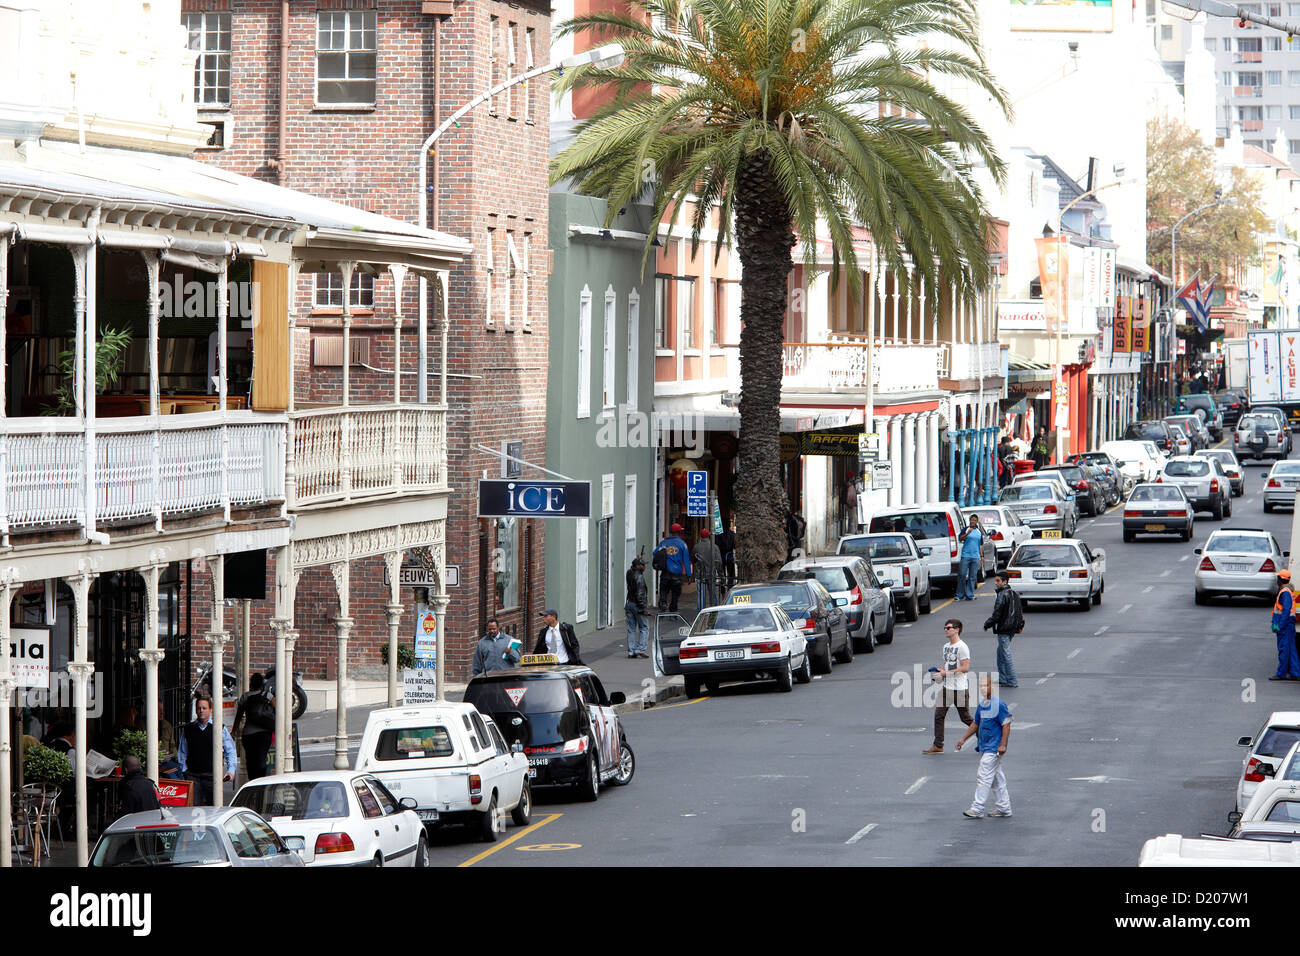 Blick auf lange Straße, Innenstadt, Cape Town, Südafrika, Afrika  Stockfotografie - Alamy